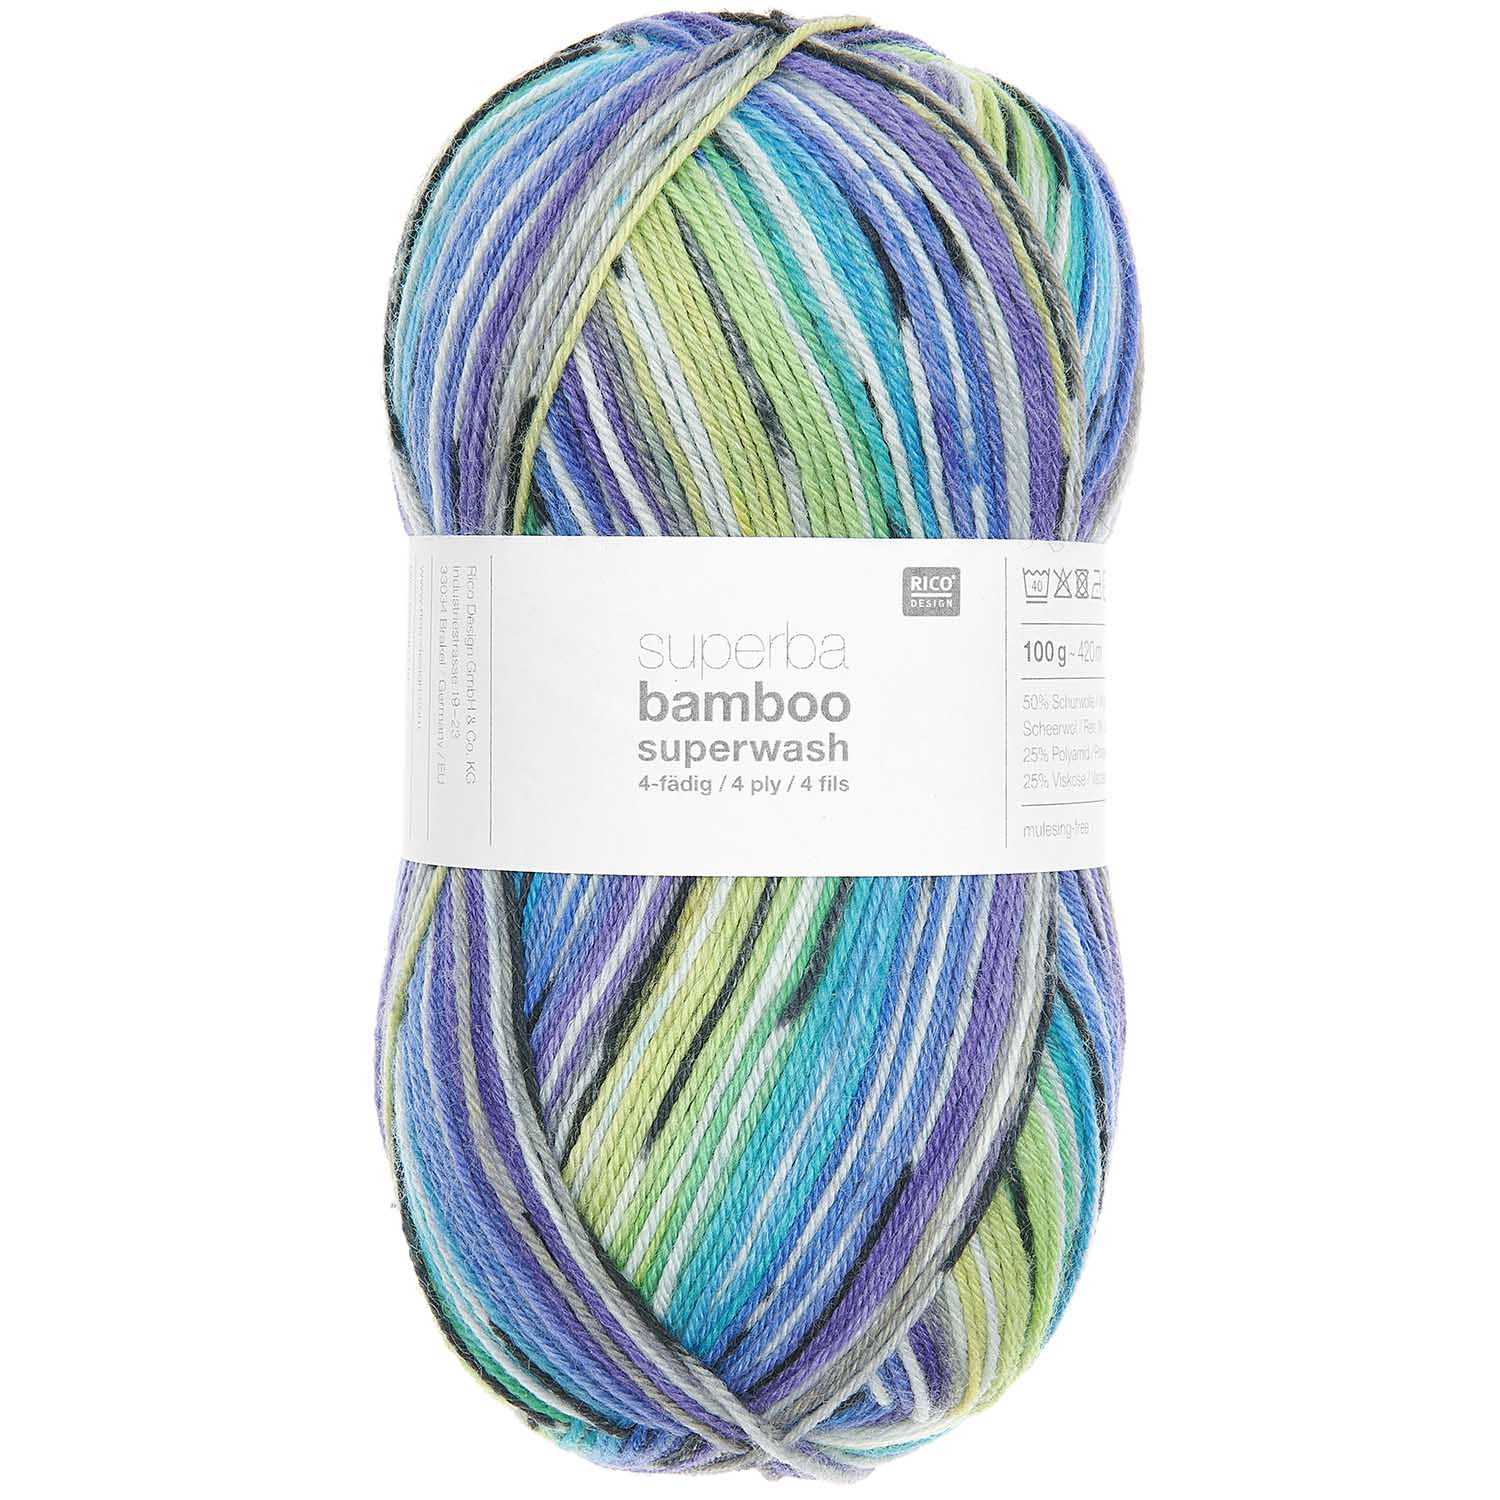 Socks Bamboo 4-fädig Rainbow 50% Schurwolle, 25% Polyamid, 25% Viskos 100g / 420m